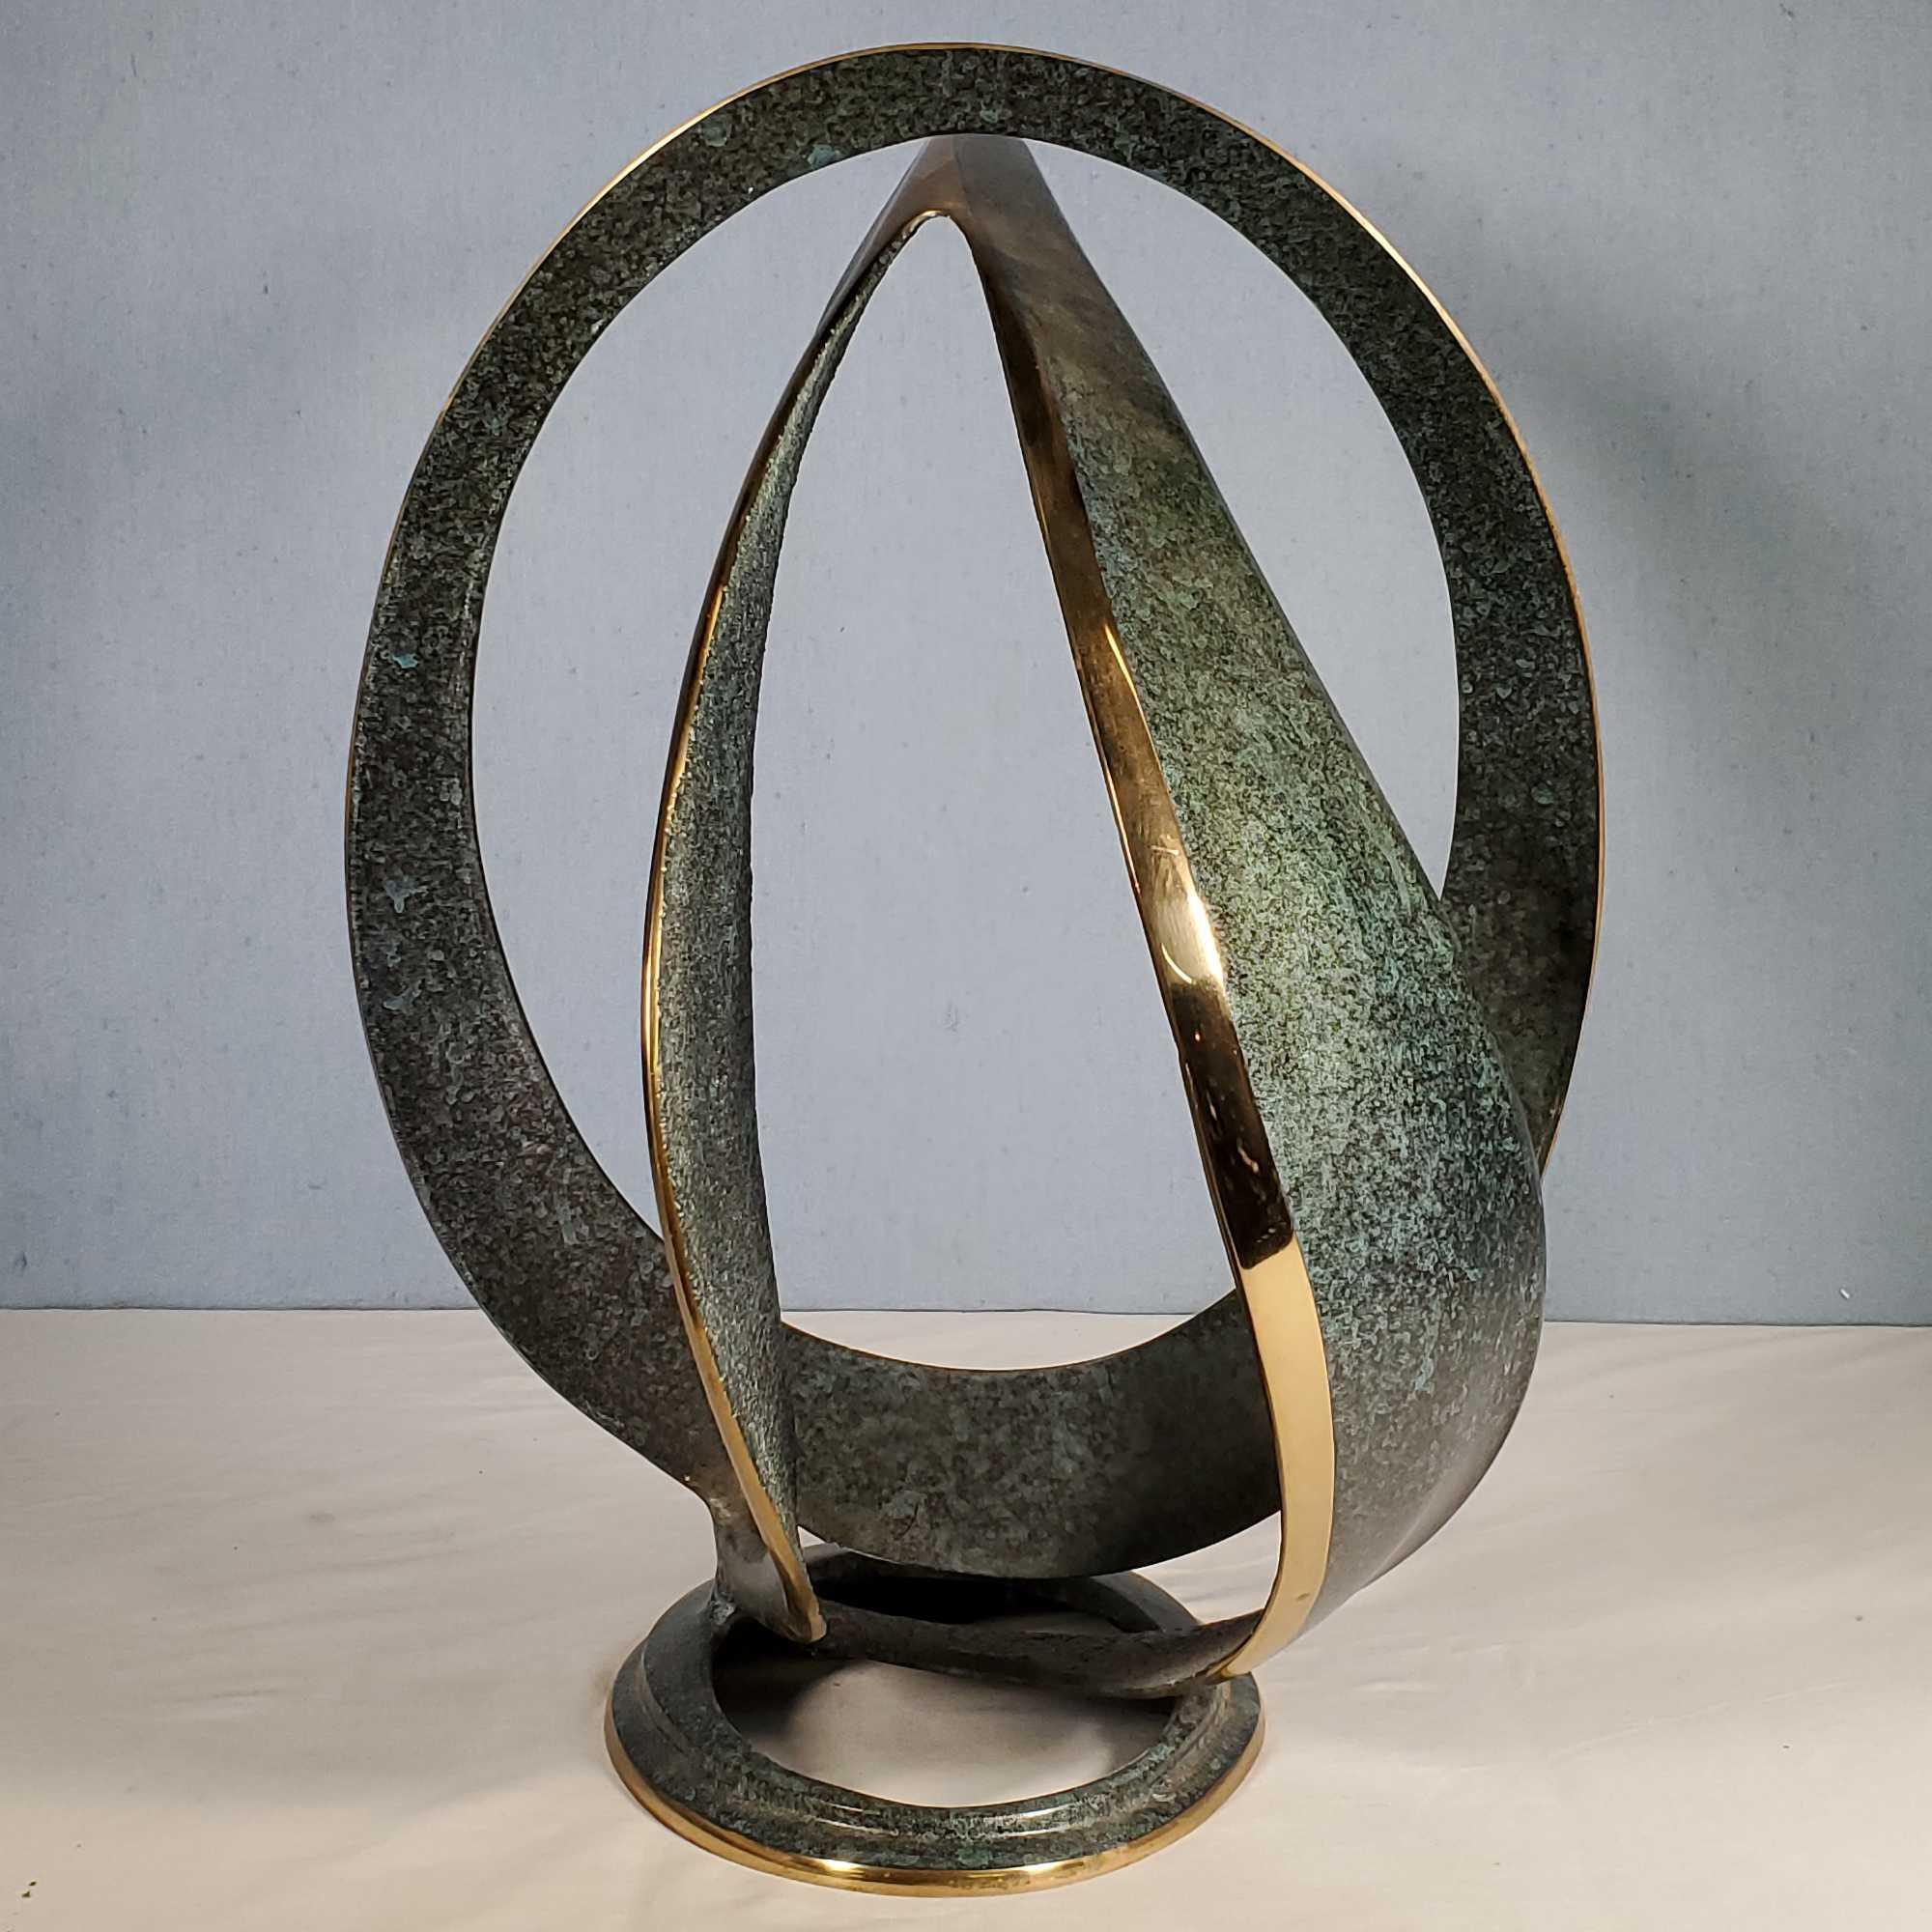 Bob Bennett Bronze Sculpture of Interlocking Circles and Arches, 1993 15/50